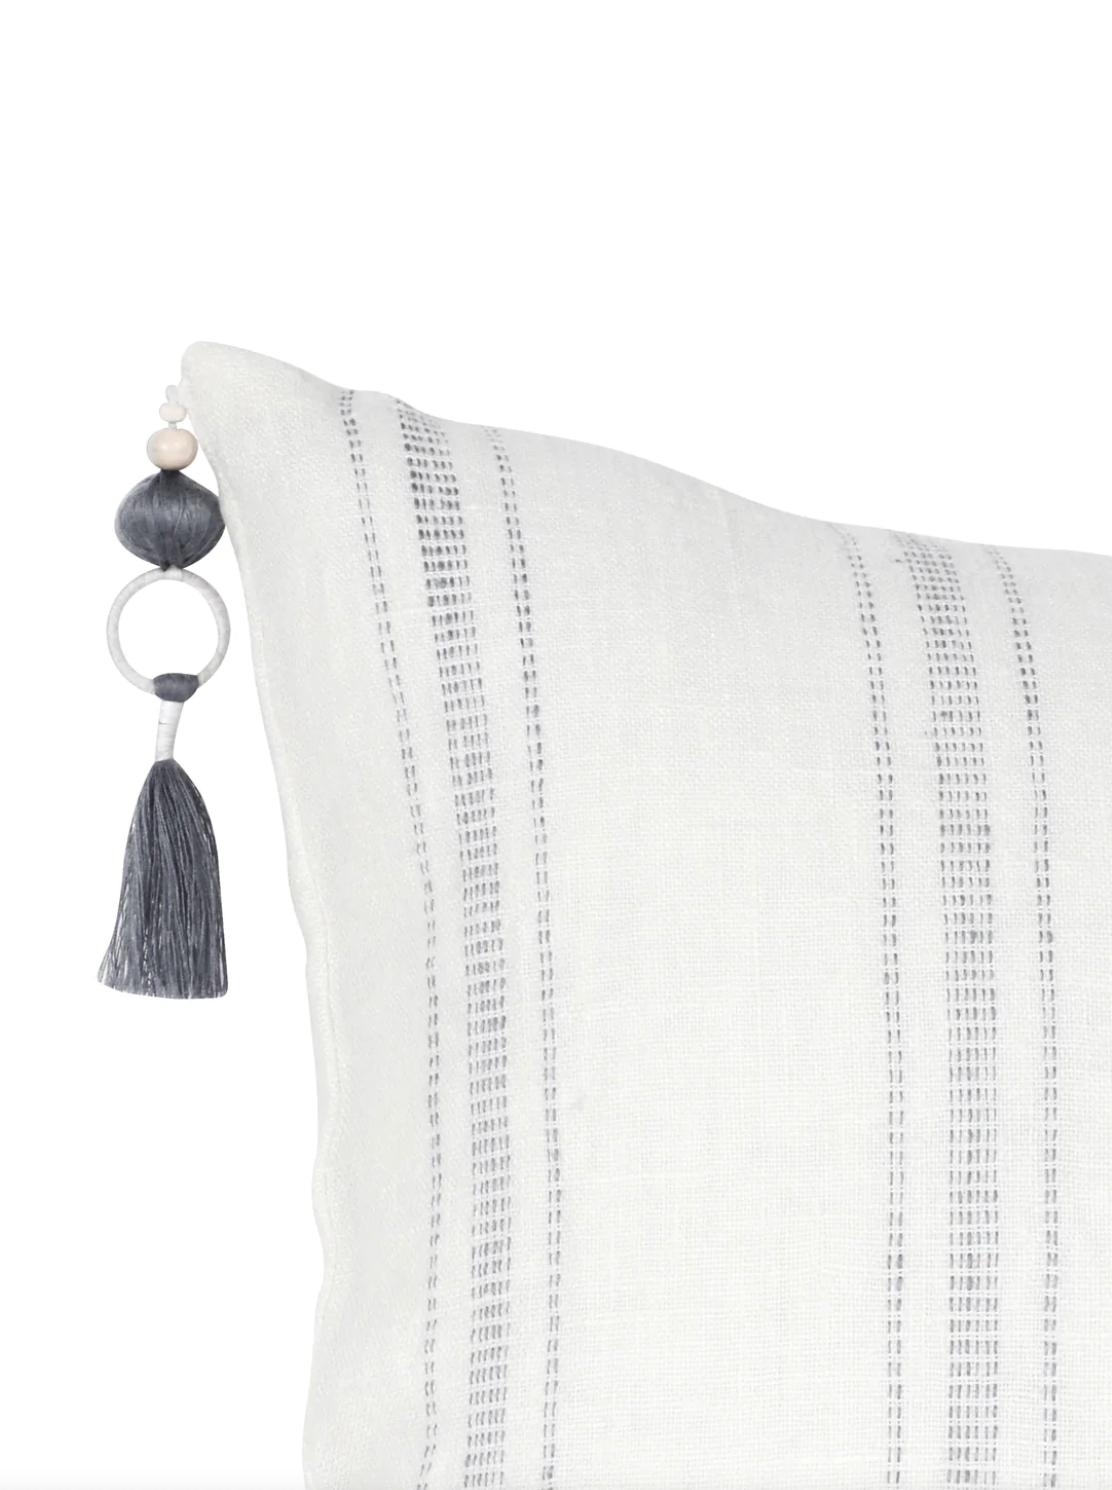 White with Grey Stripes Linen Pillows